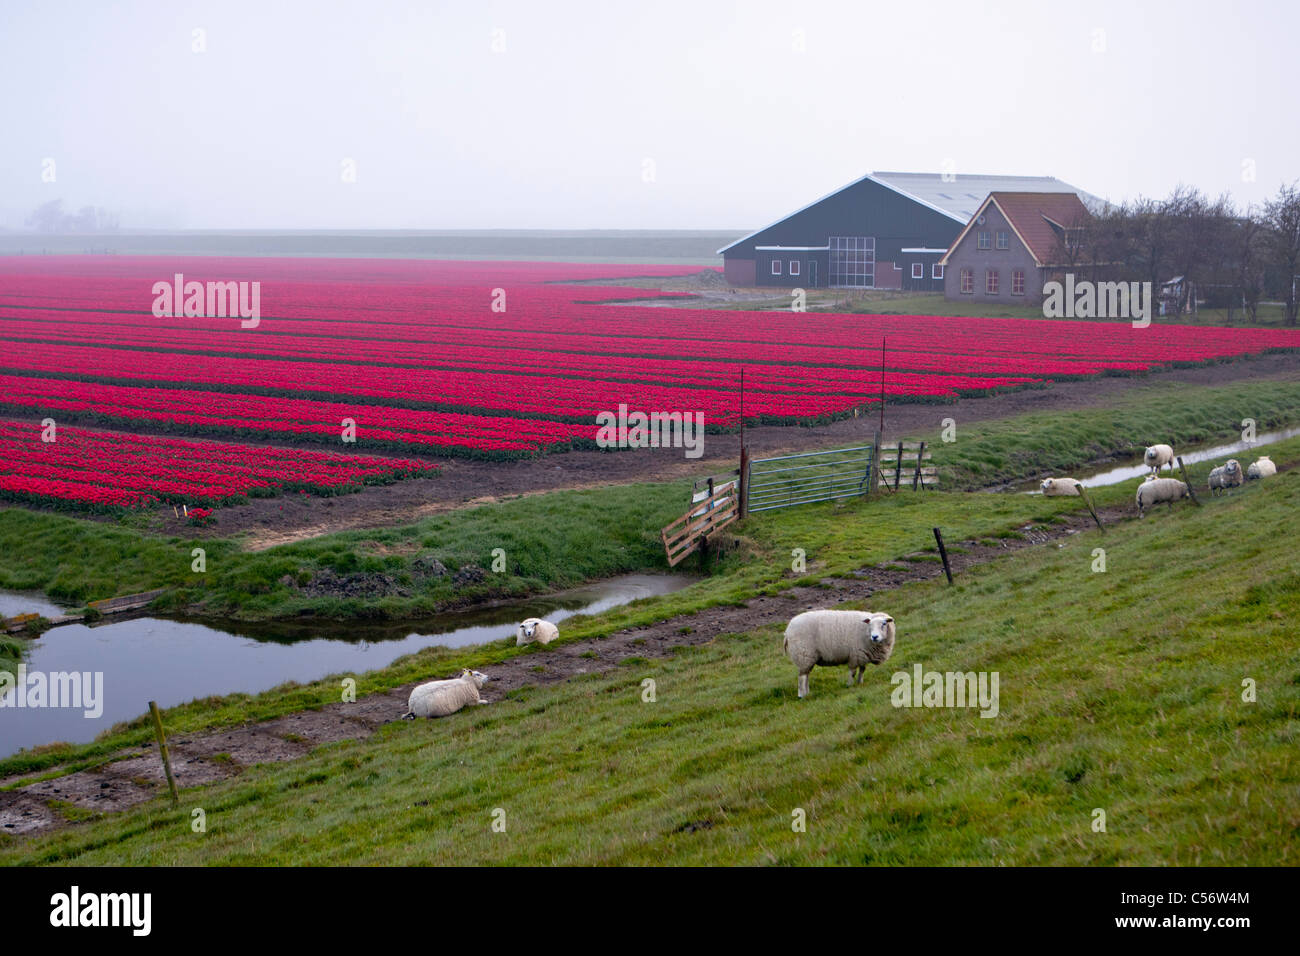 The Netherlands, Eenigenburg, Tulip field near farm. Sheep Stock Photo